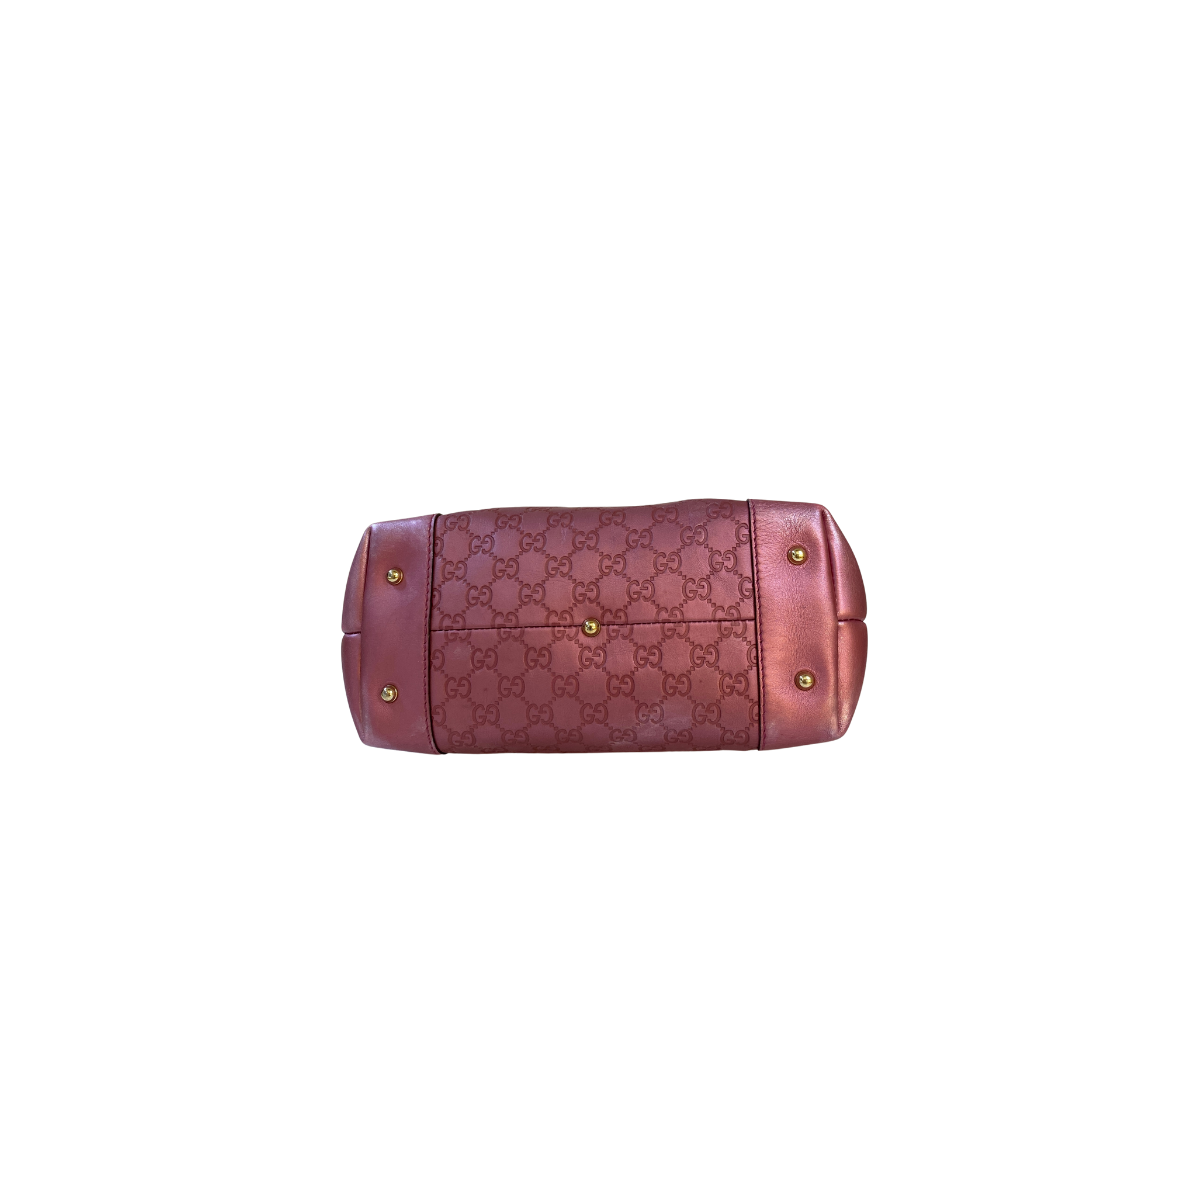 Gucci Gucci GG Tote Sima Læder - Håndtasker - Etoile Luxury Vintage